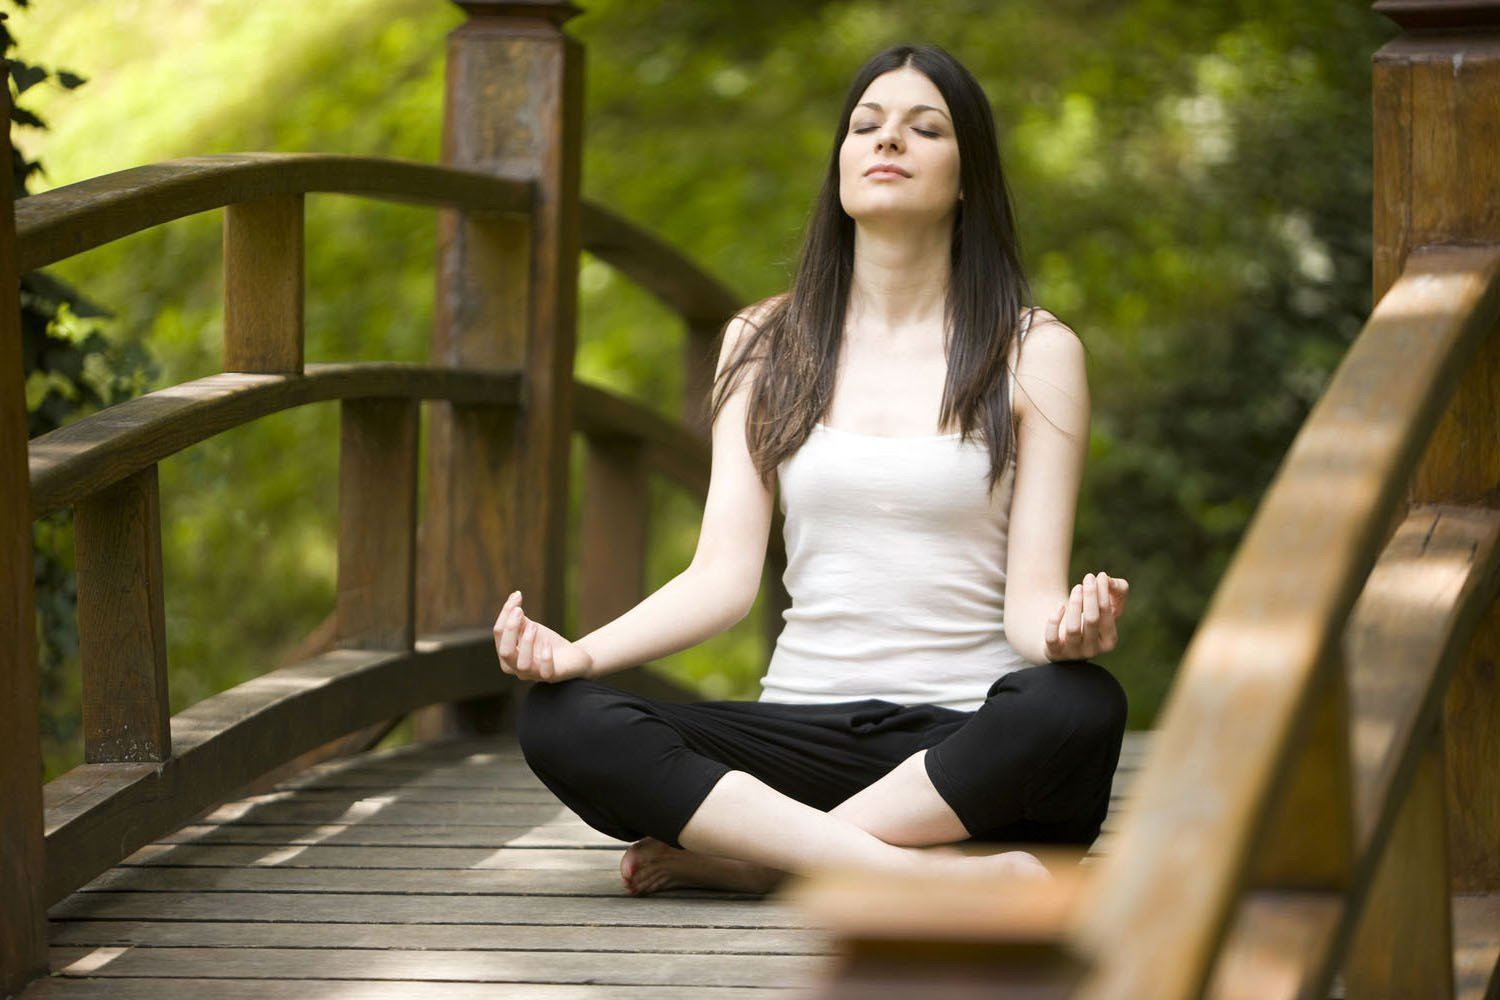 Understanding the Flow of Prana (Life-Force Energy) • Yoga Basics